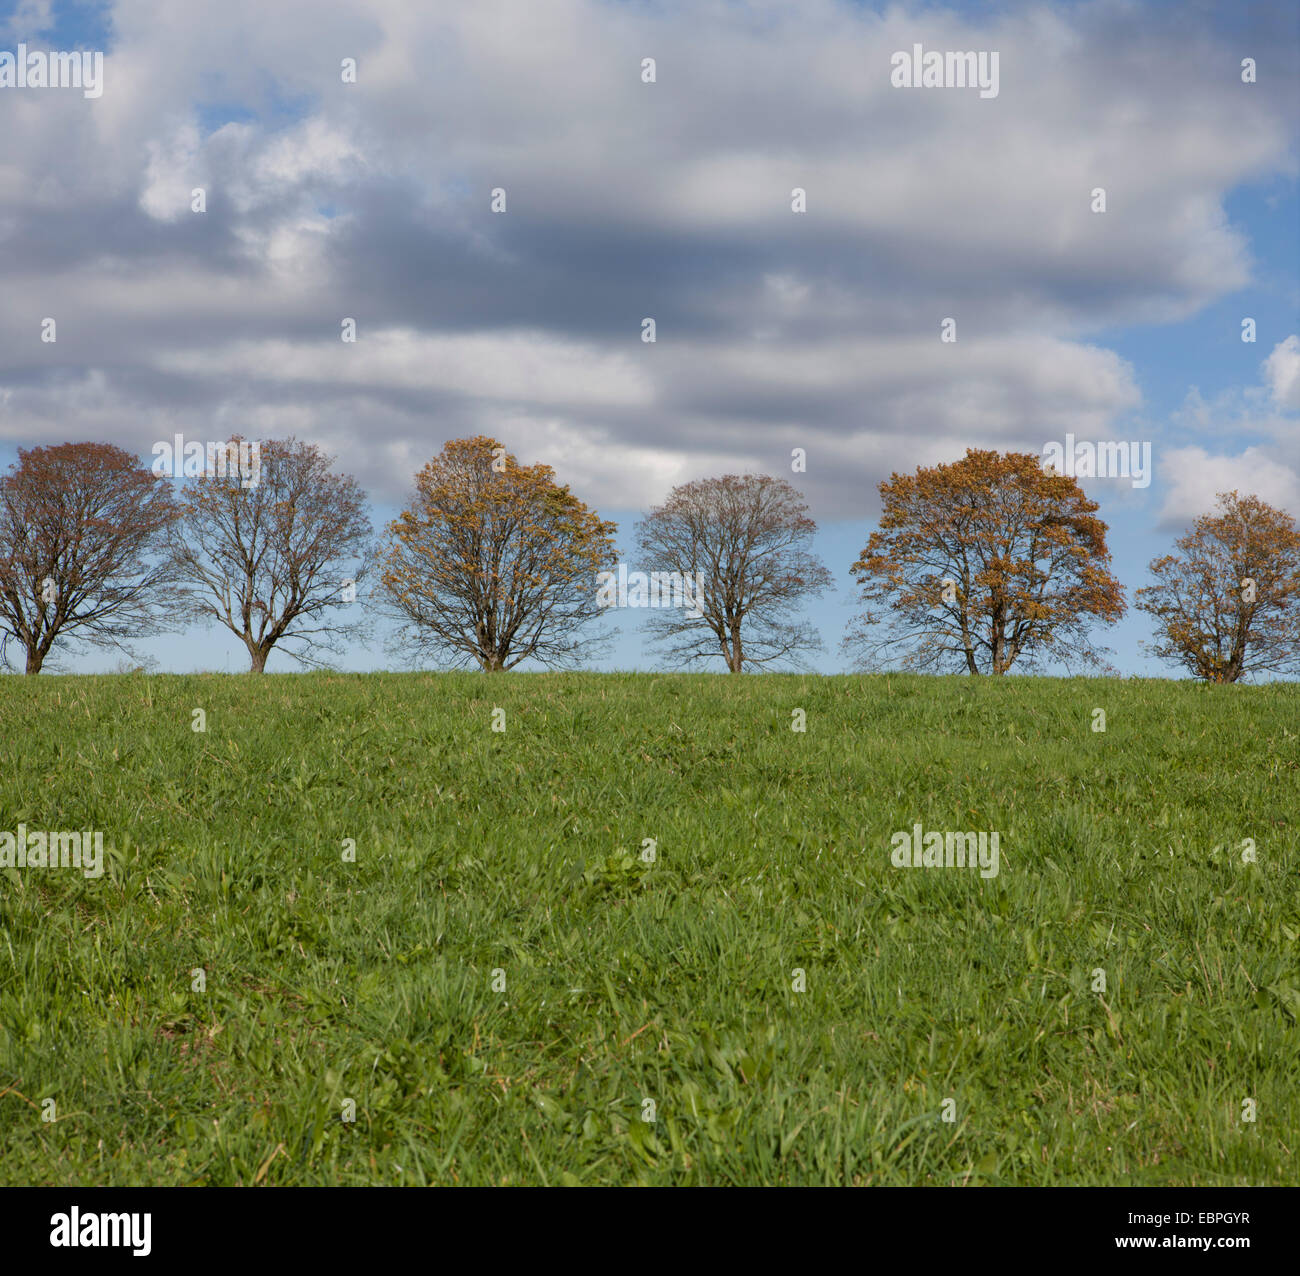 Row of trees with clouds, Meinerzhagen, North Rhine-Westphalia, Germany, Europe Stock Photo